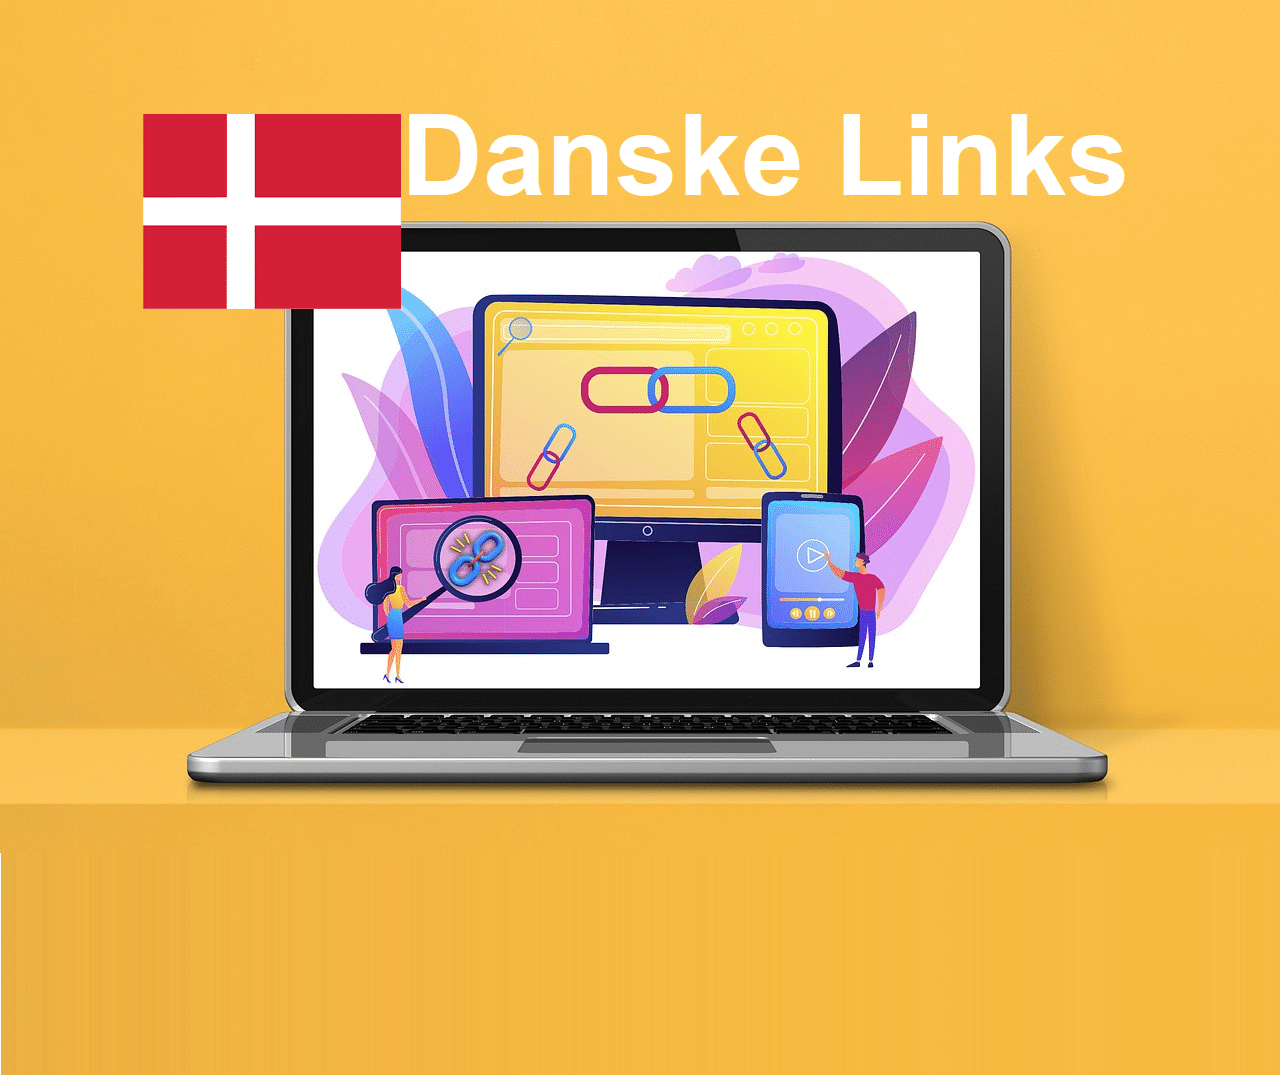 Danske Links